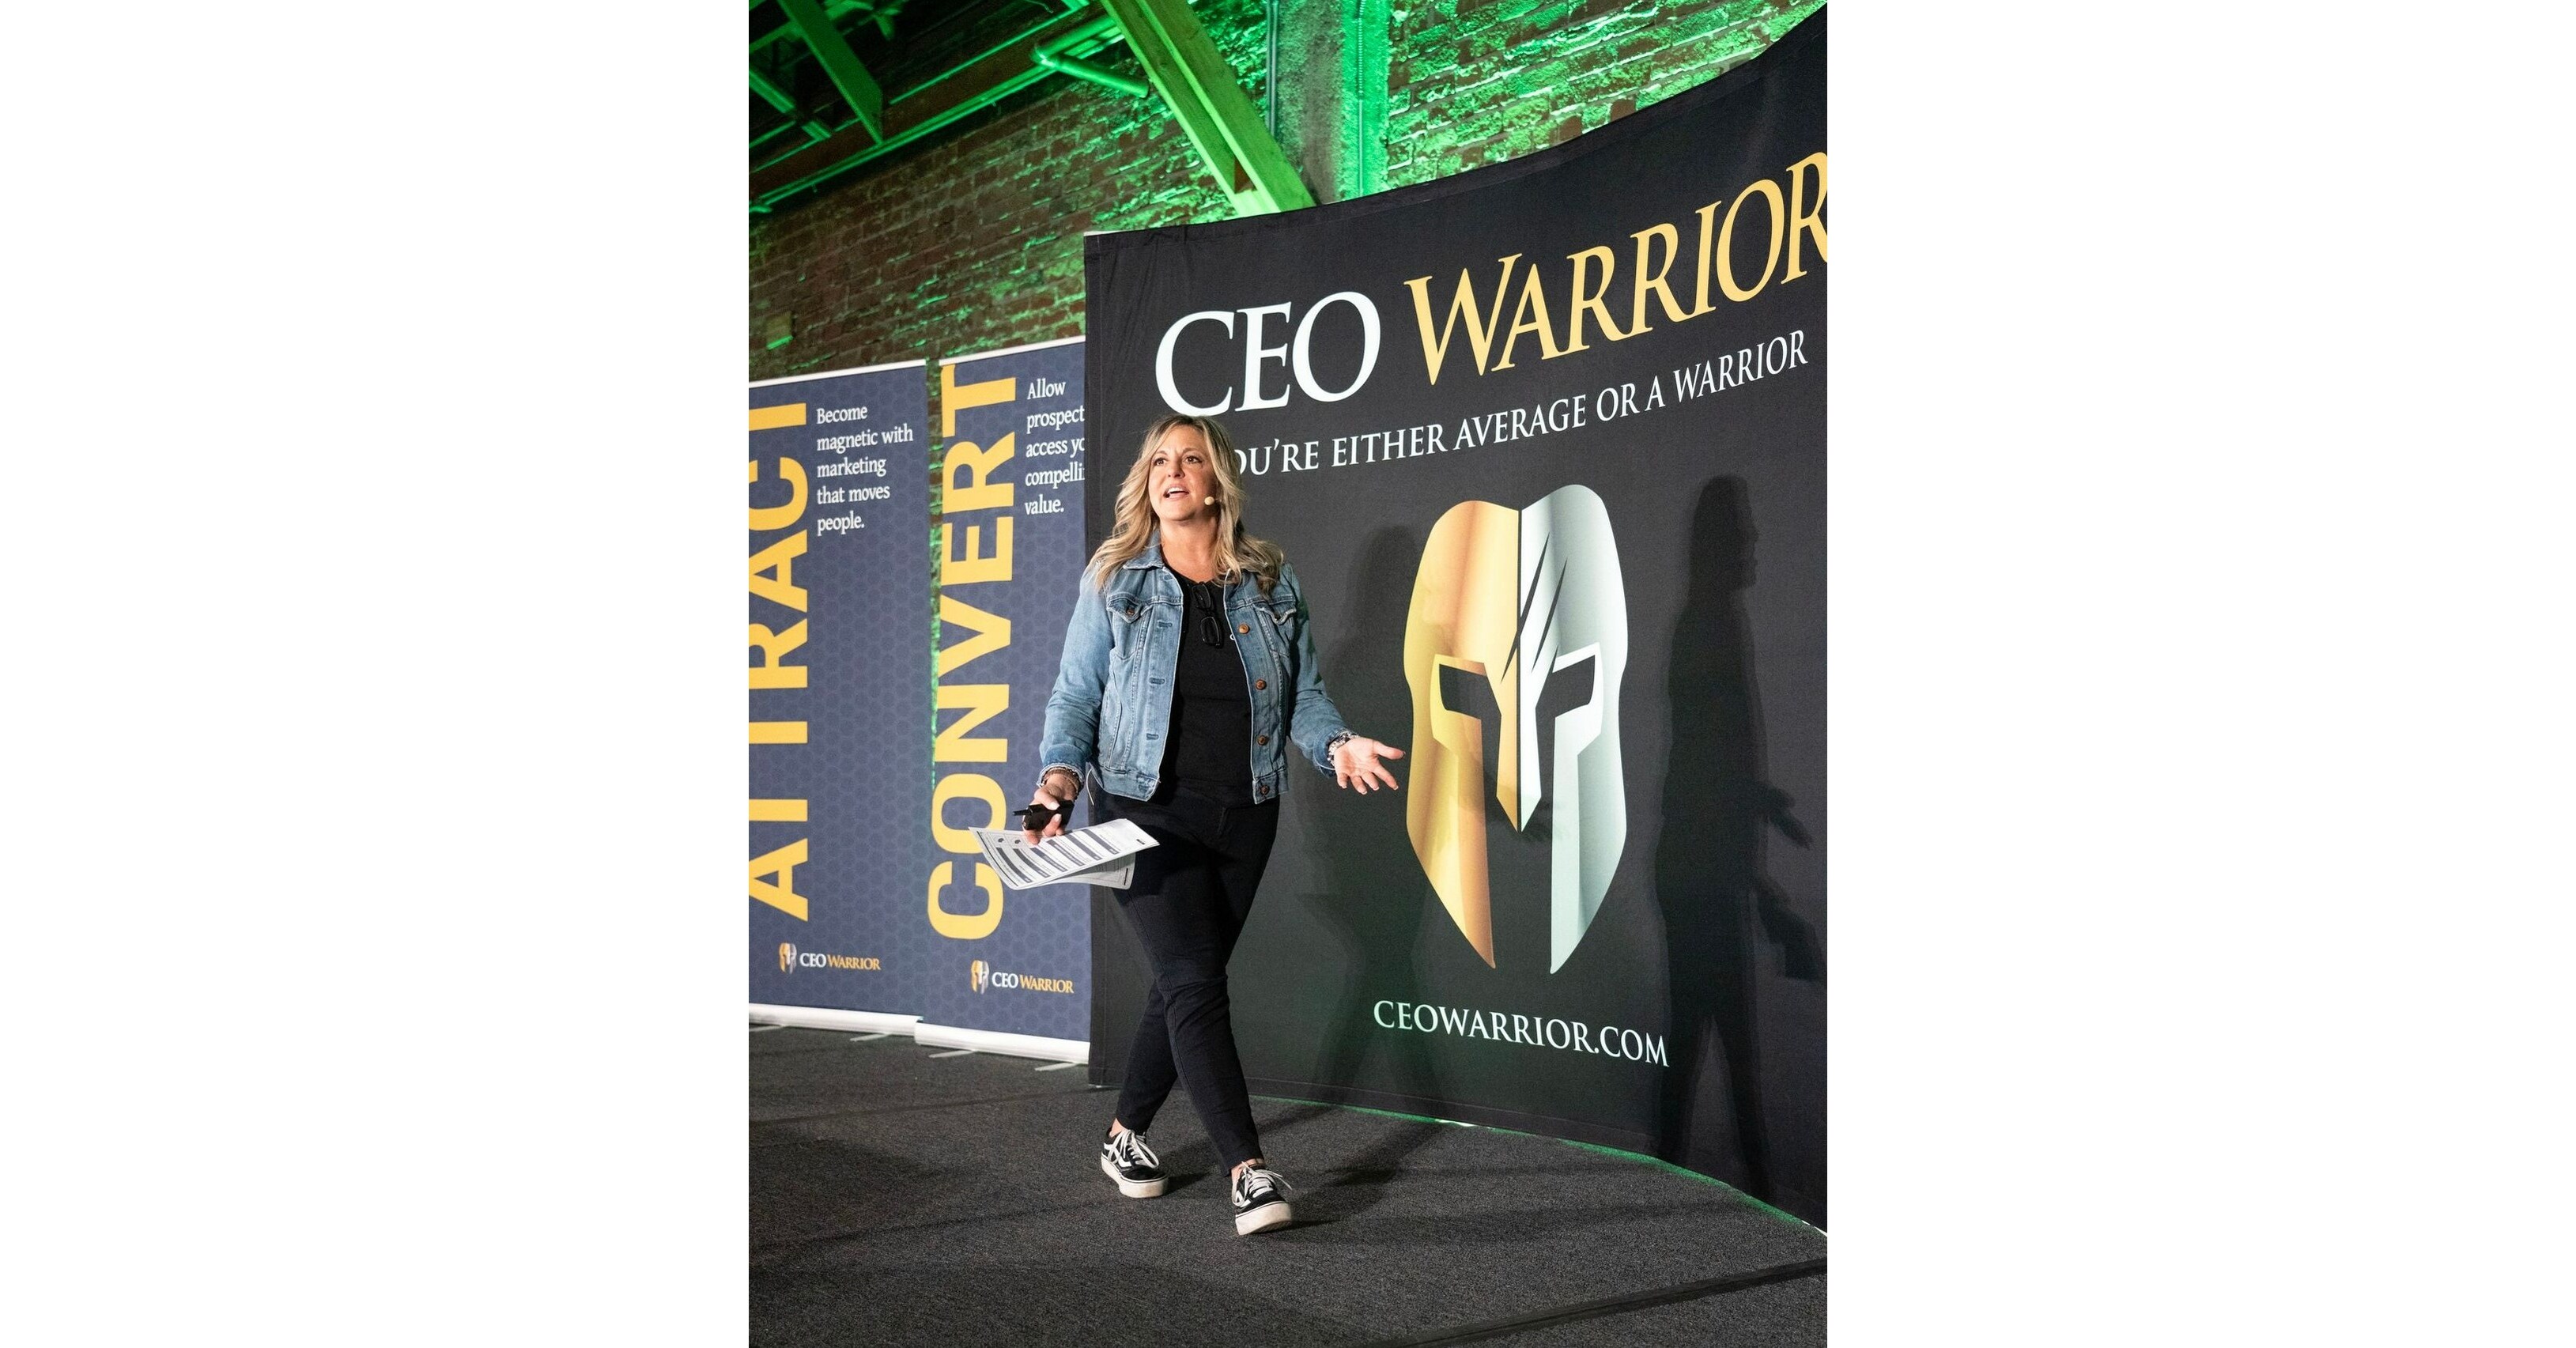 CEO Warrior hosts Service Business Live seminar in Atlanta in May